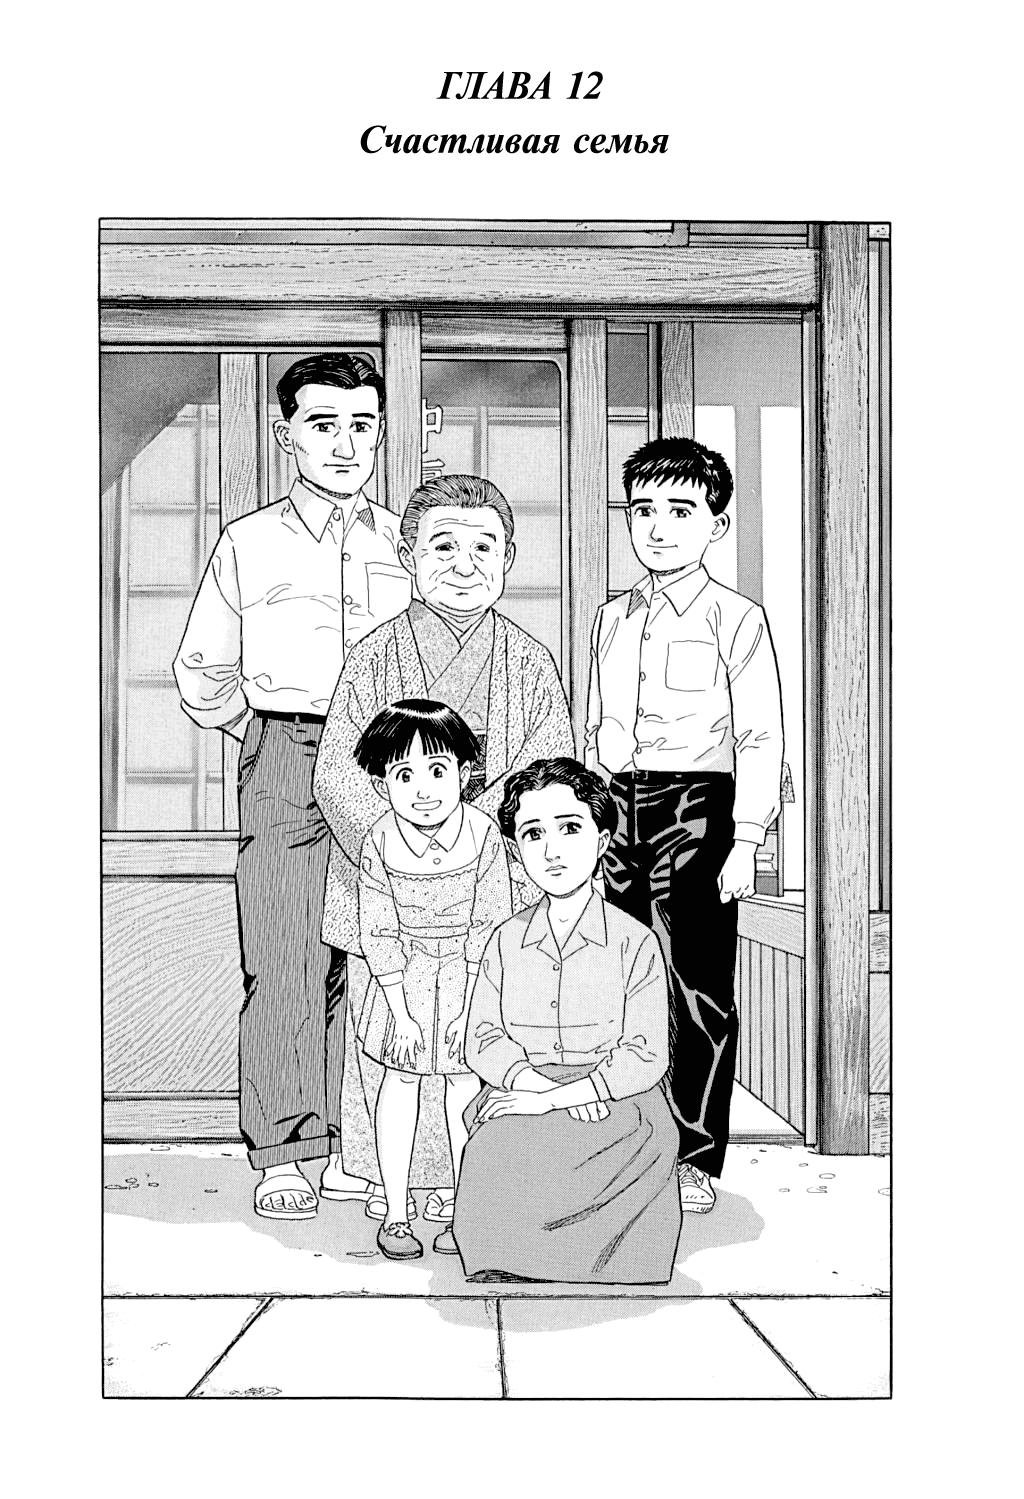 Счастливая глава 16. Моя семья Манга. Haruka-na machi. Манга пушистая семья.